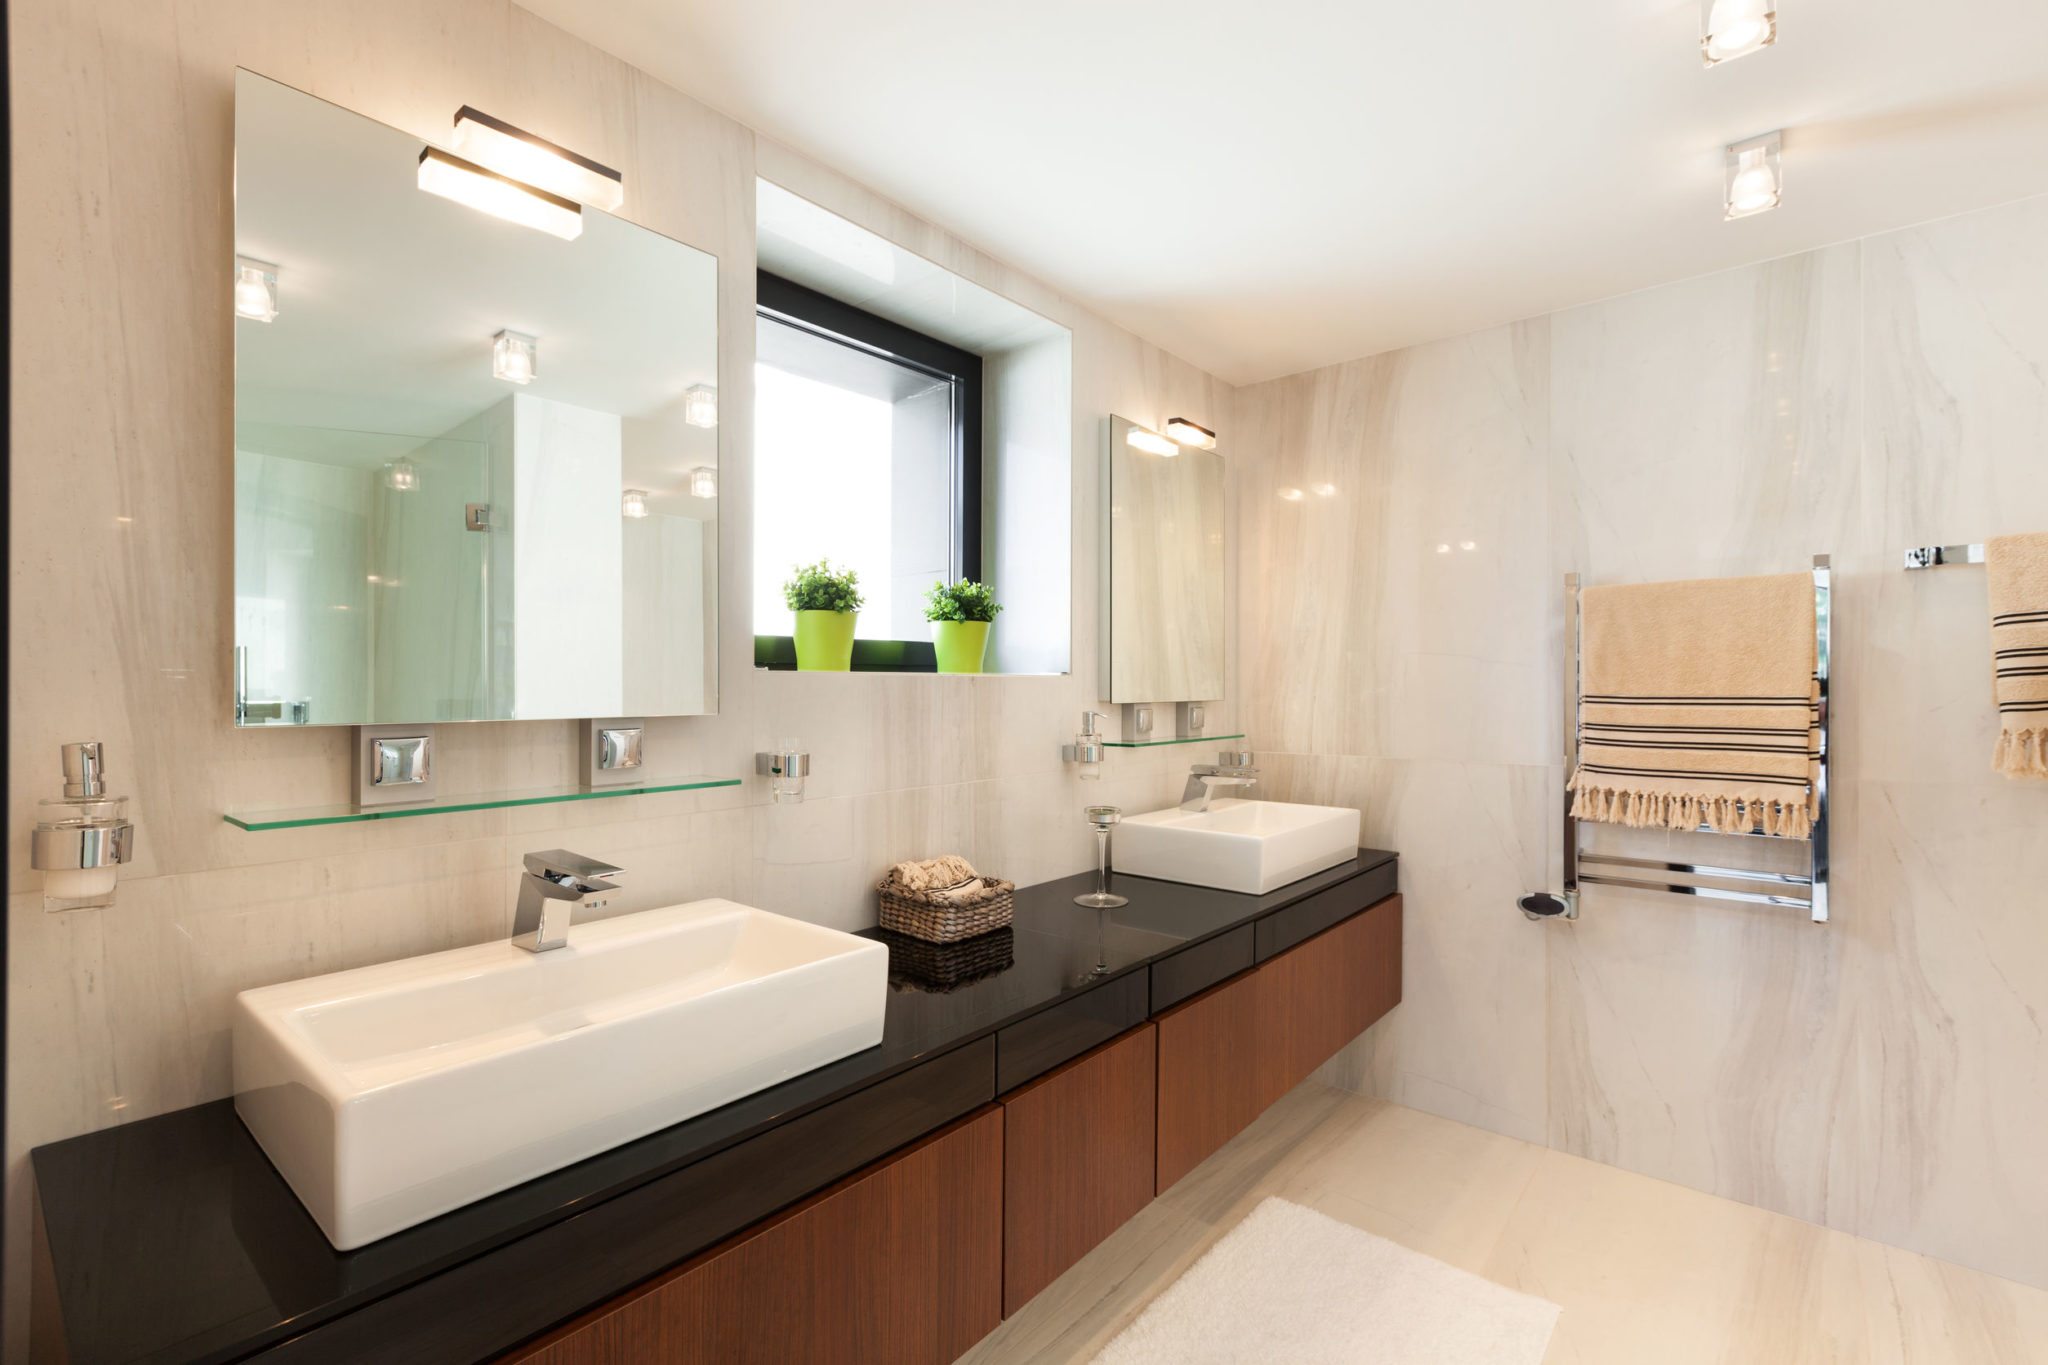 44078173 – modern house beautiful interiors, bathroom